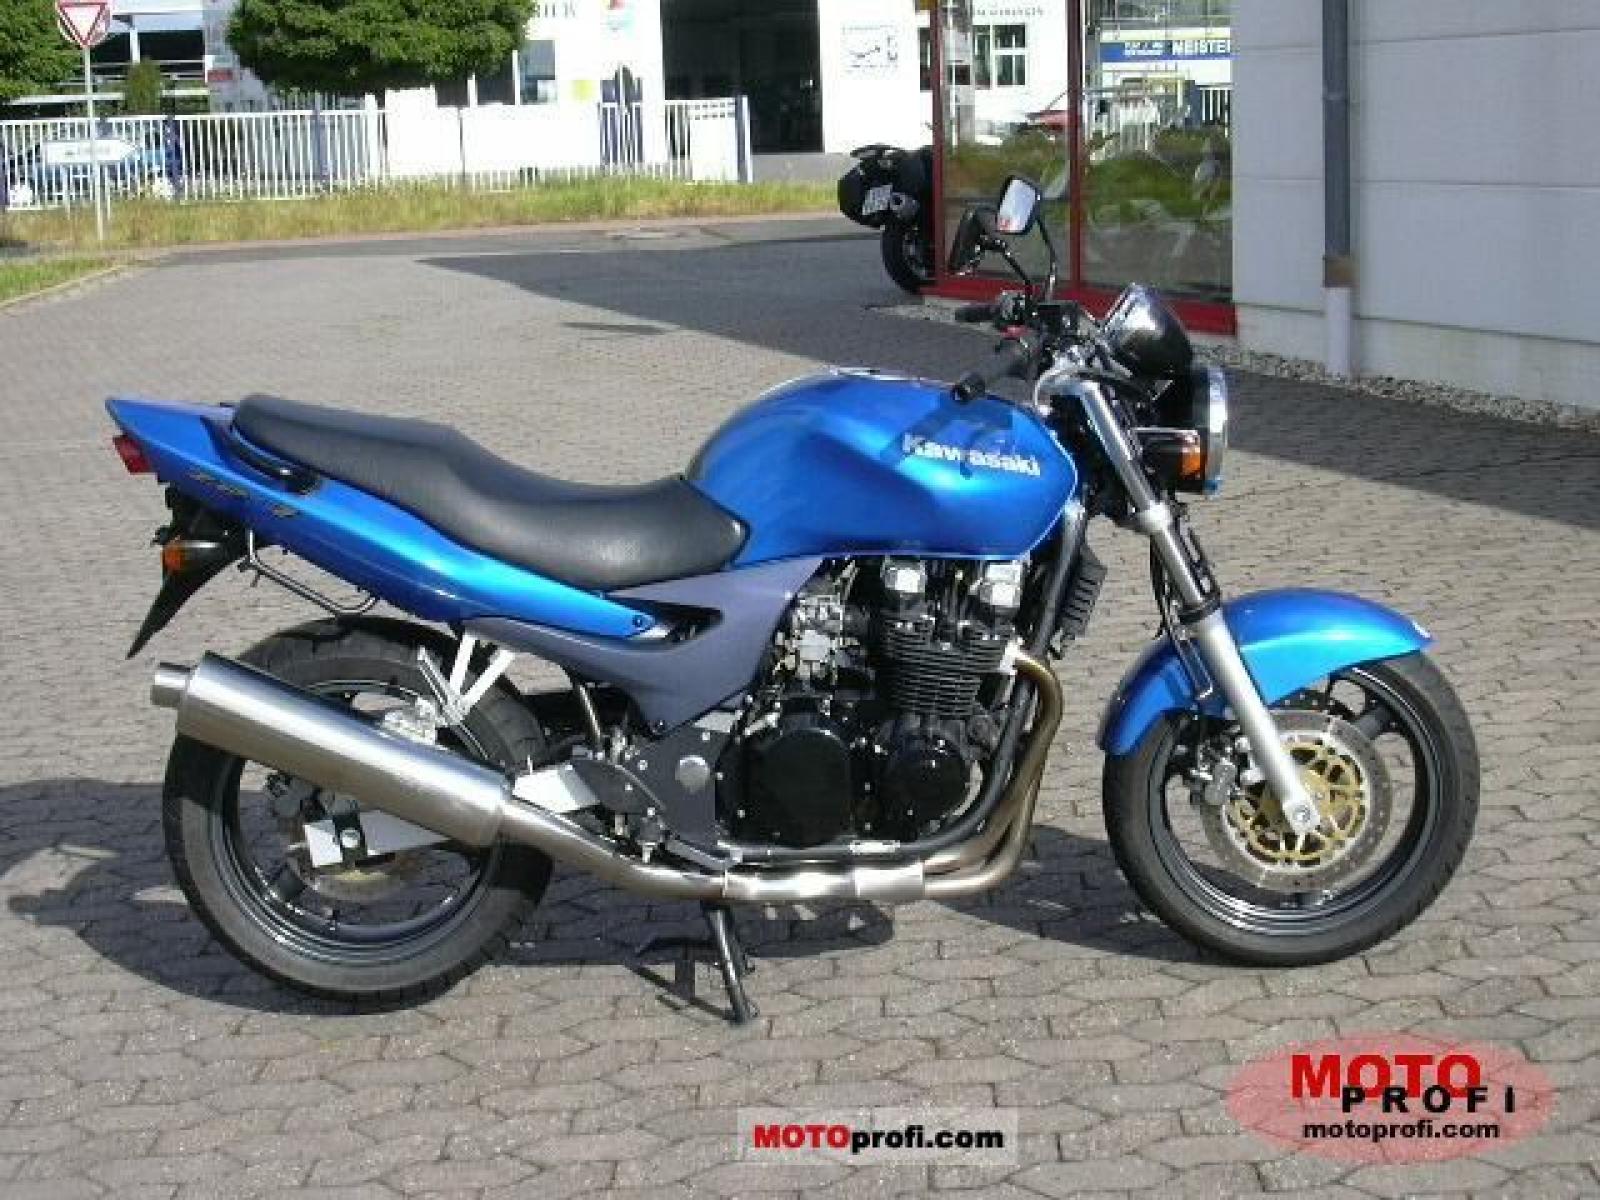 2003 Kawasaki Zr 7s Motorcycles for sale